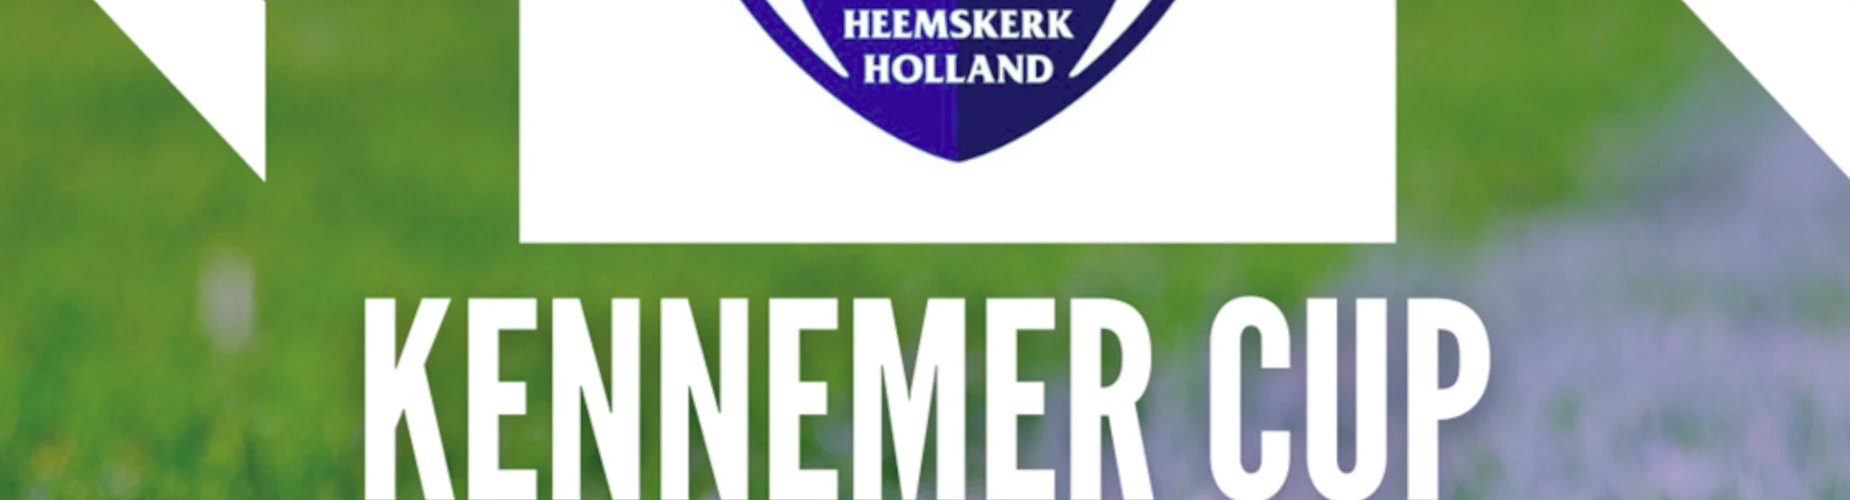 Banner - Kennemer Cup - ADO’20 - Heemskerk